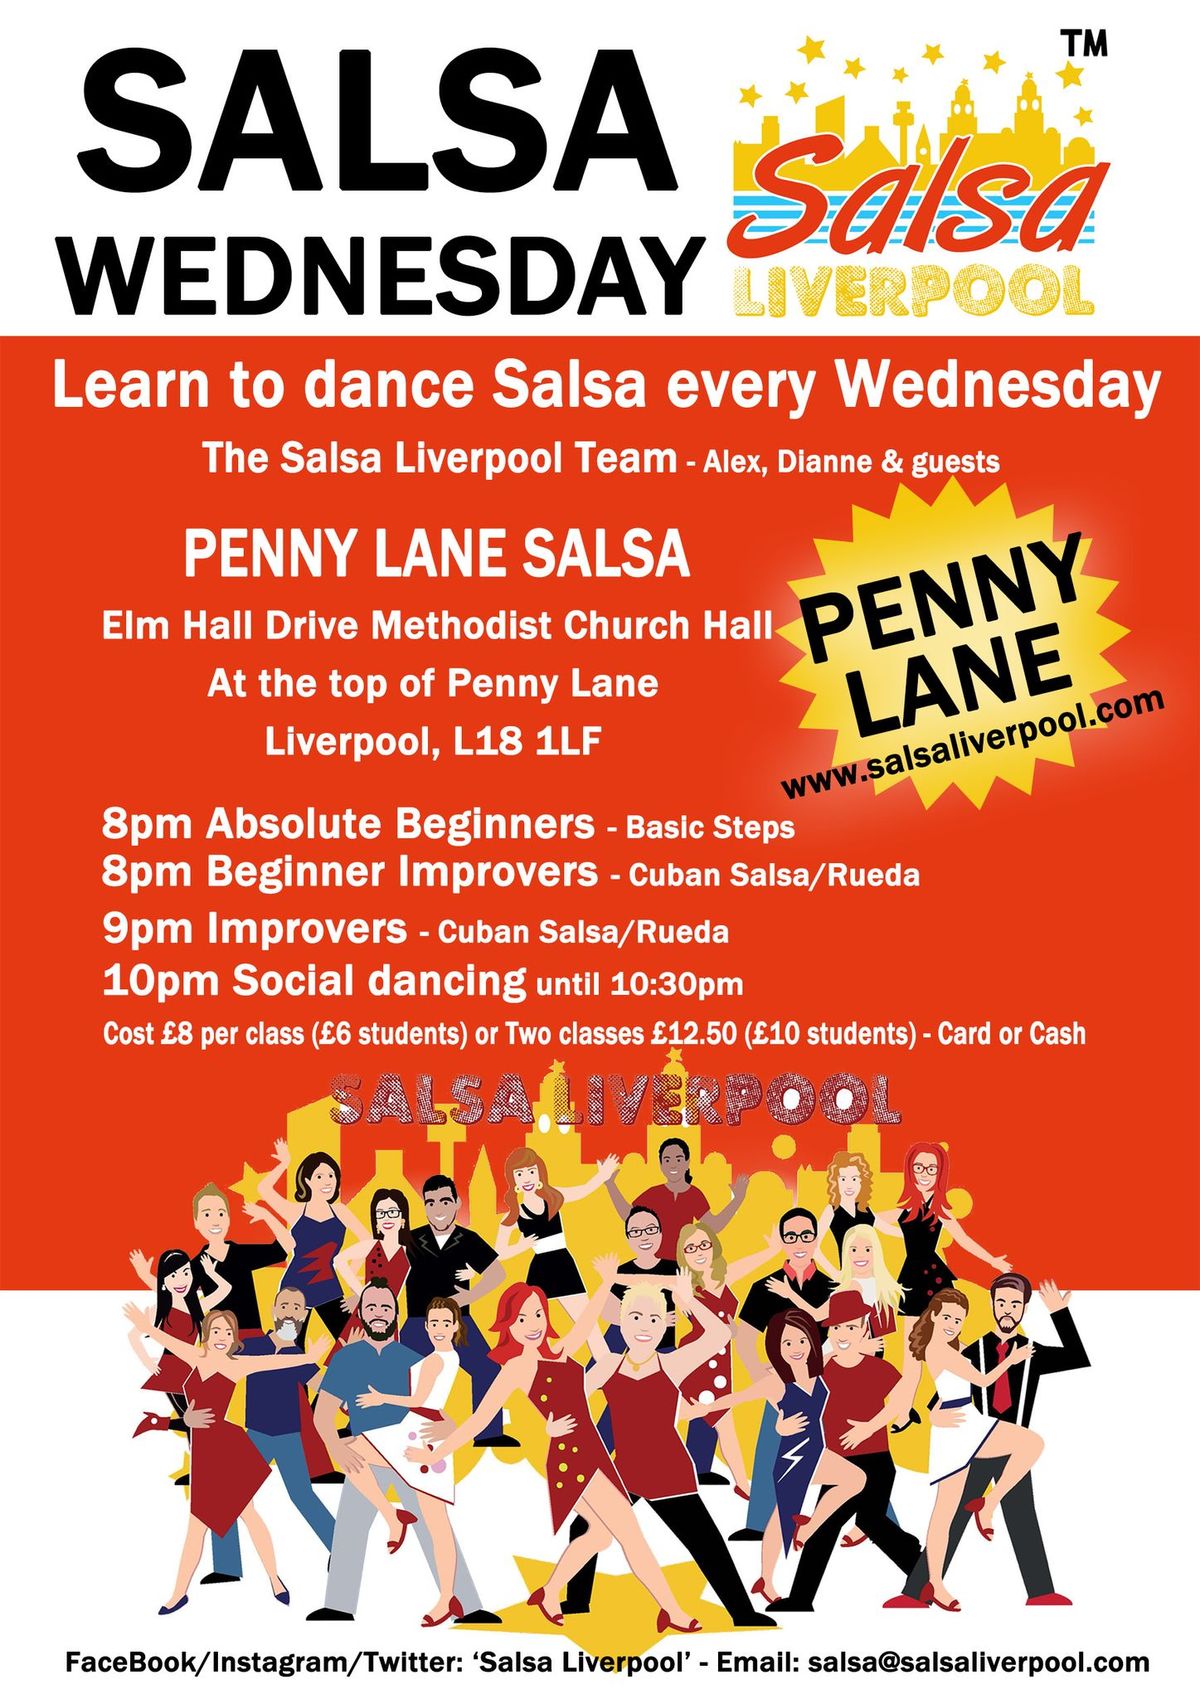 PENNY LANE SALSA - Every Wednesday